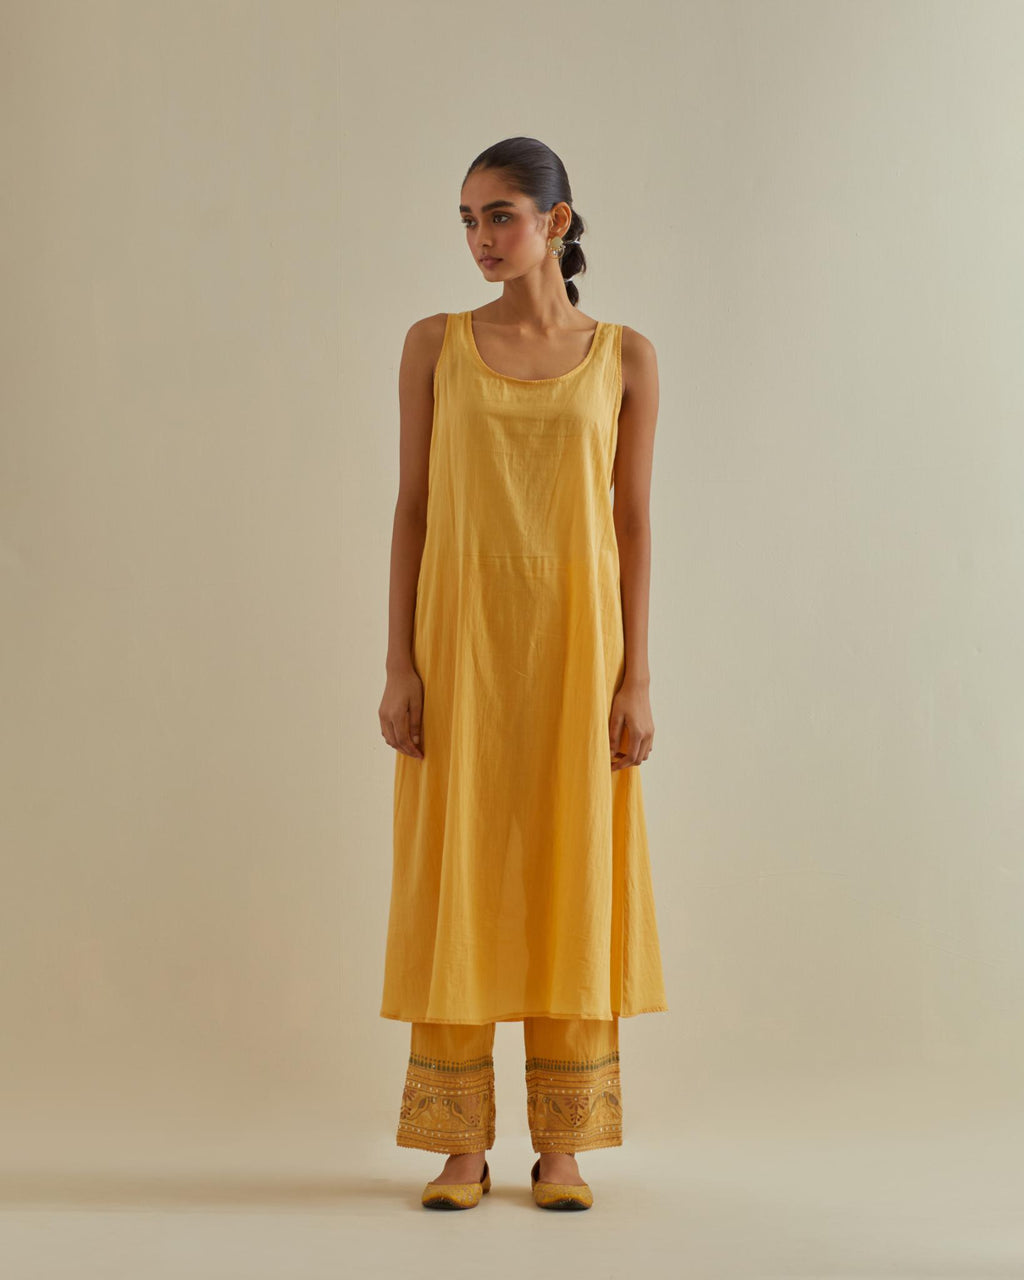 Yellow cotton chanderi kurta dress set with a V neck embroidered yoke and panels.